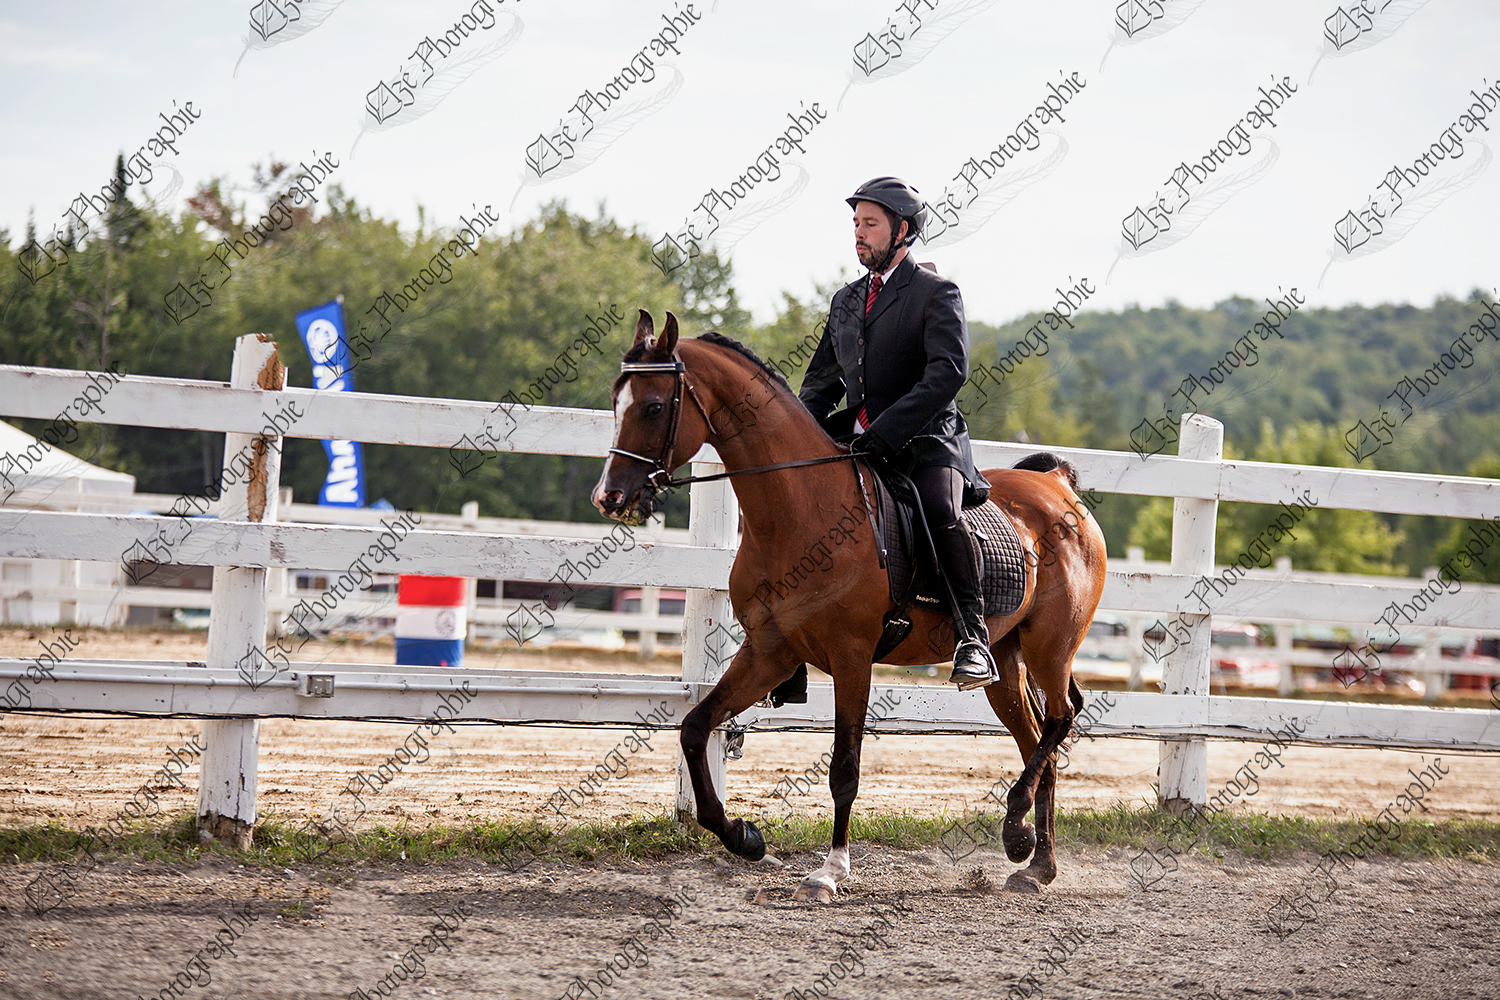 elze_photo_5492_competition_equestre_cheval_show_horse